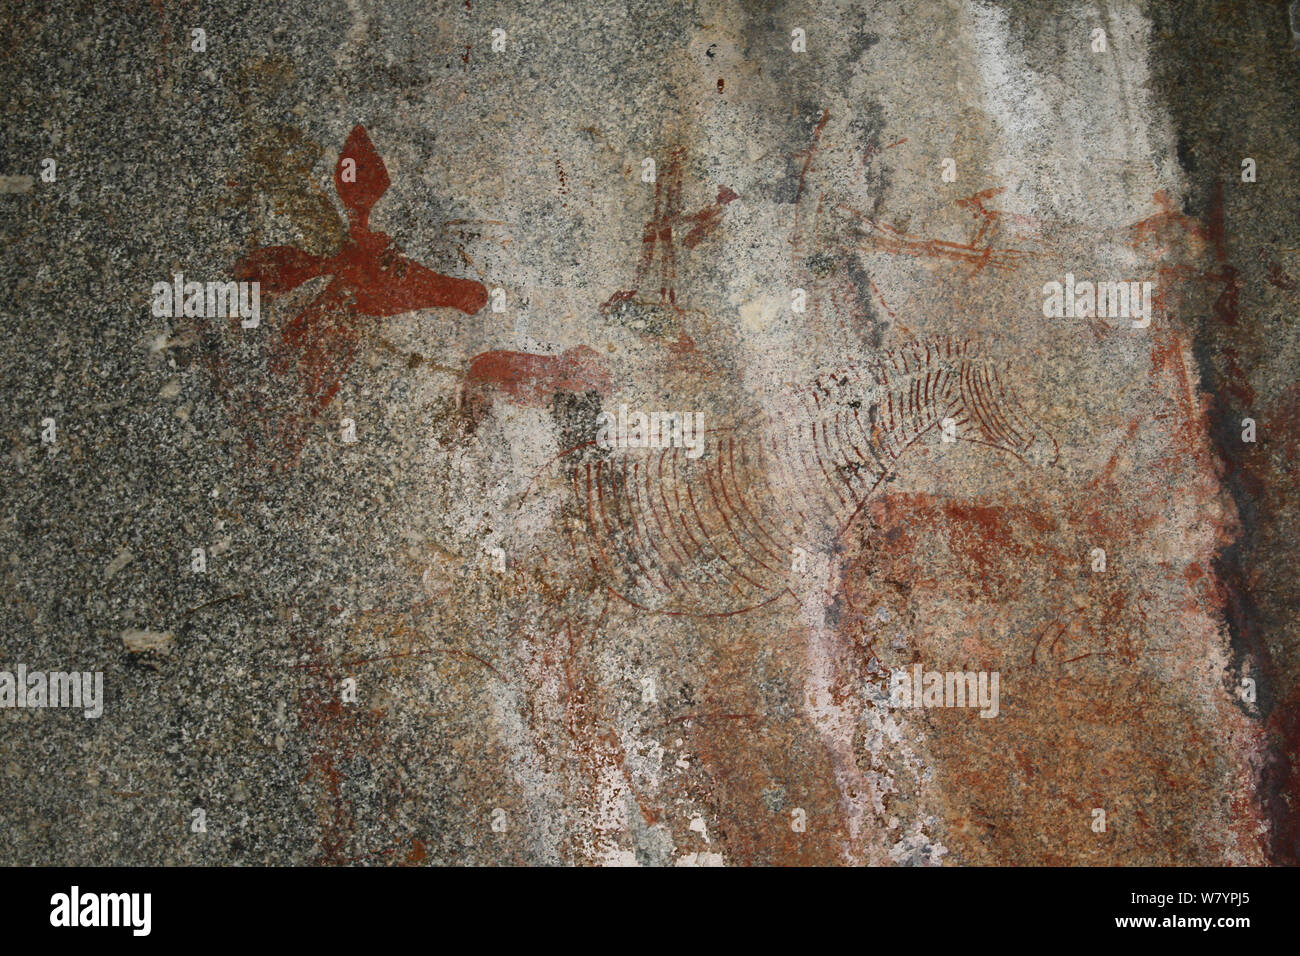 San paintings of Antelope, Matobo Hills, Zimbabwe. January 2011. Stock Photo